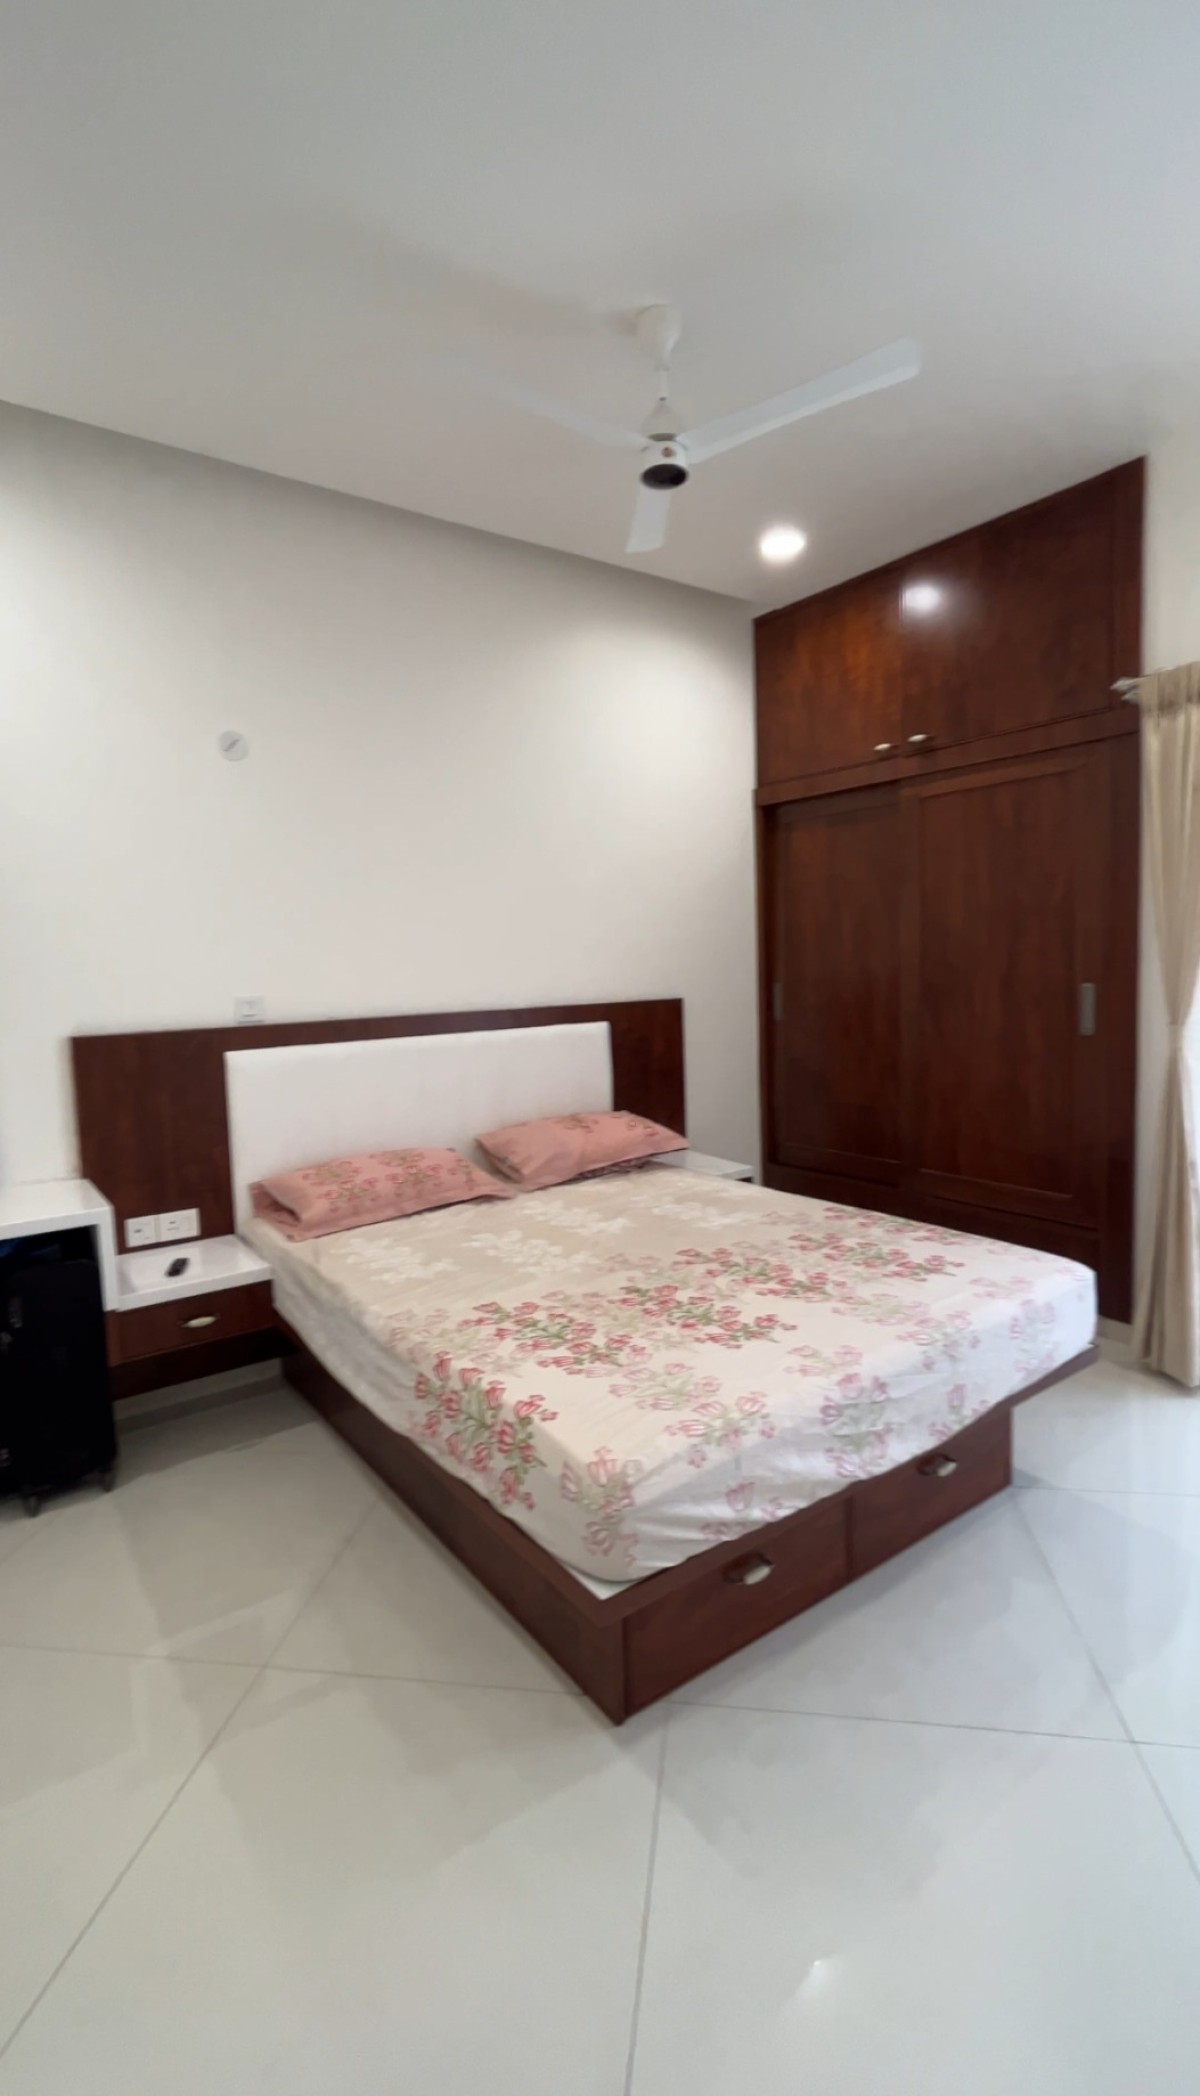 Bedroom of Mr. & Mrs. Abhishek Residence by Stellarch